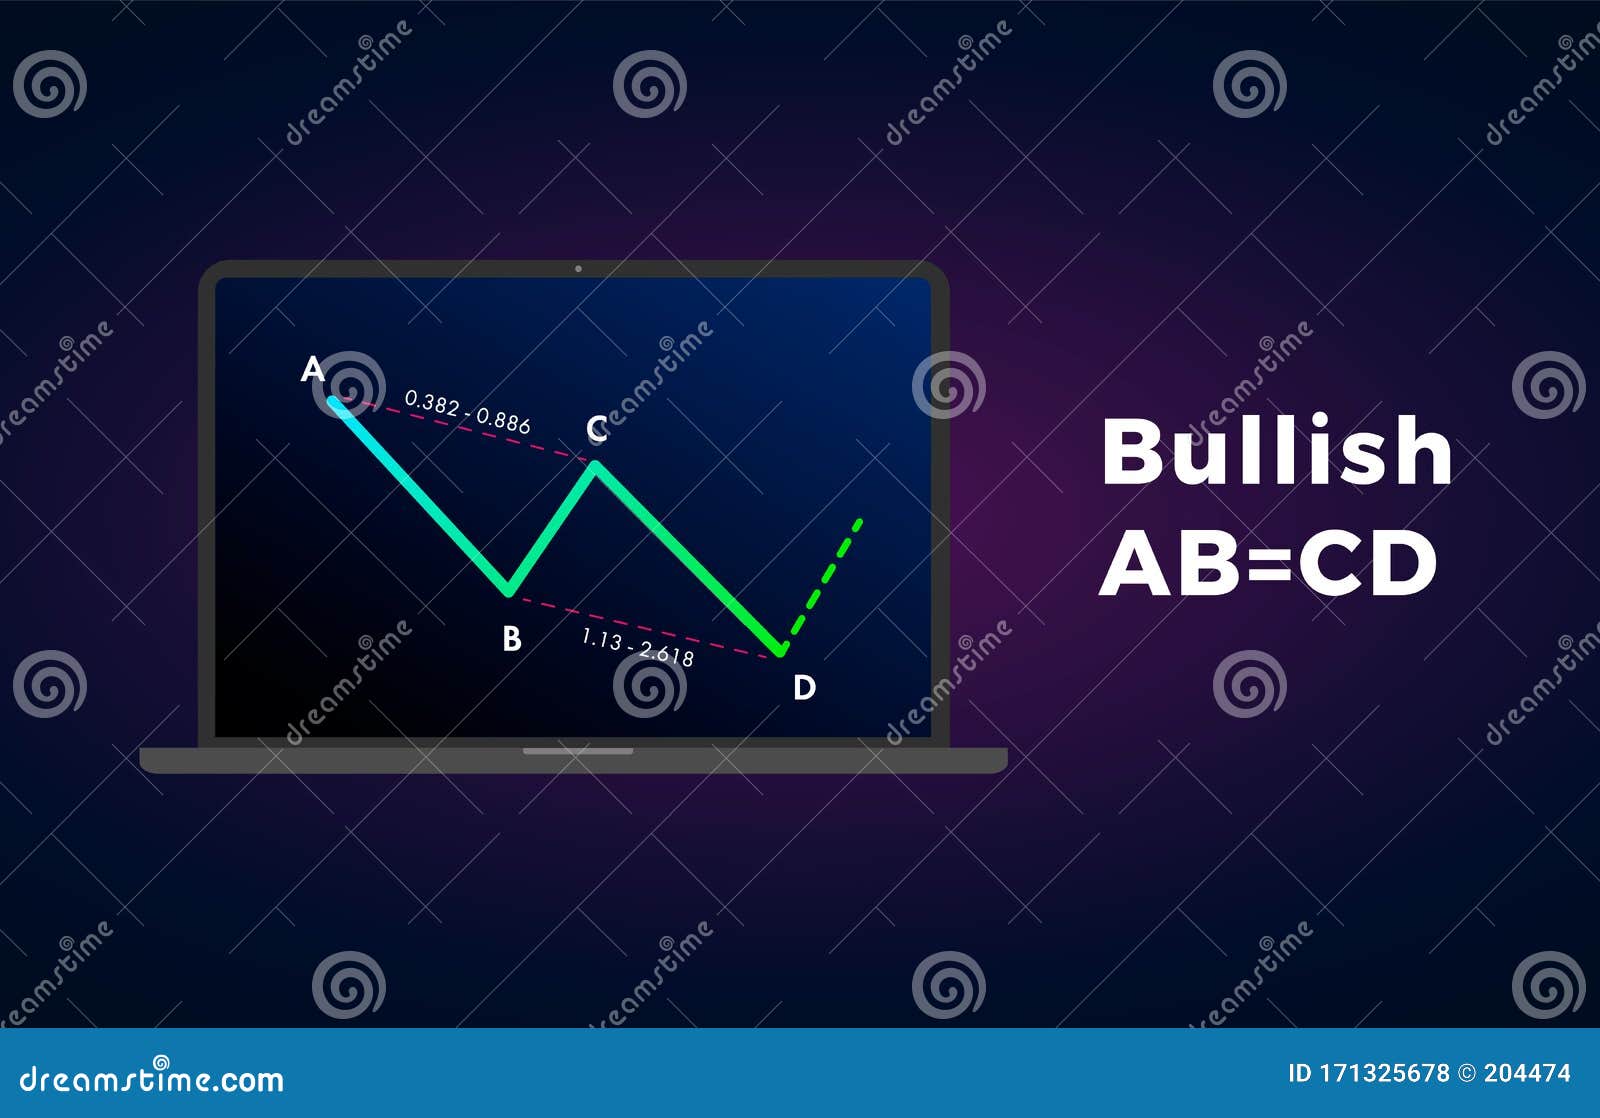 Bullish ABCD - Harmonic Patterns With Bullish Formation ...